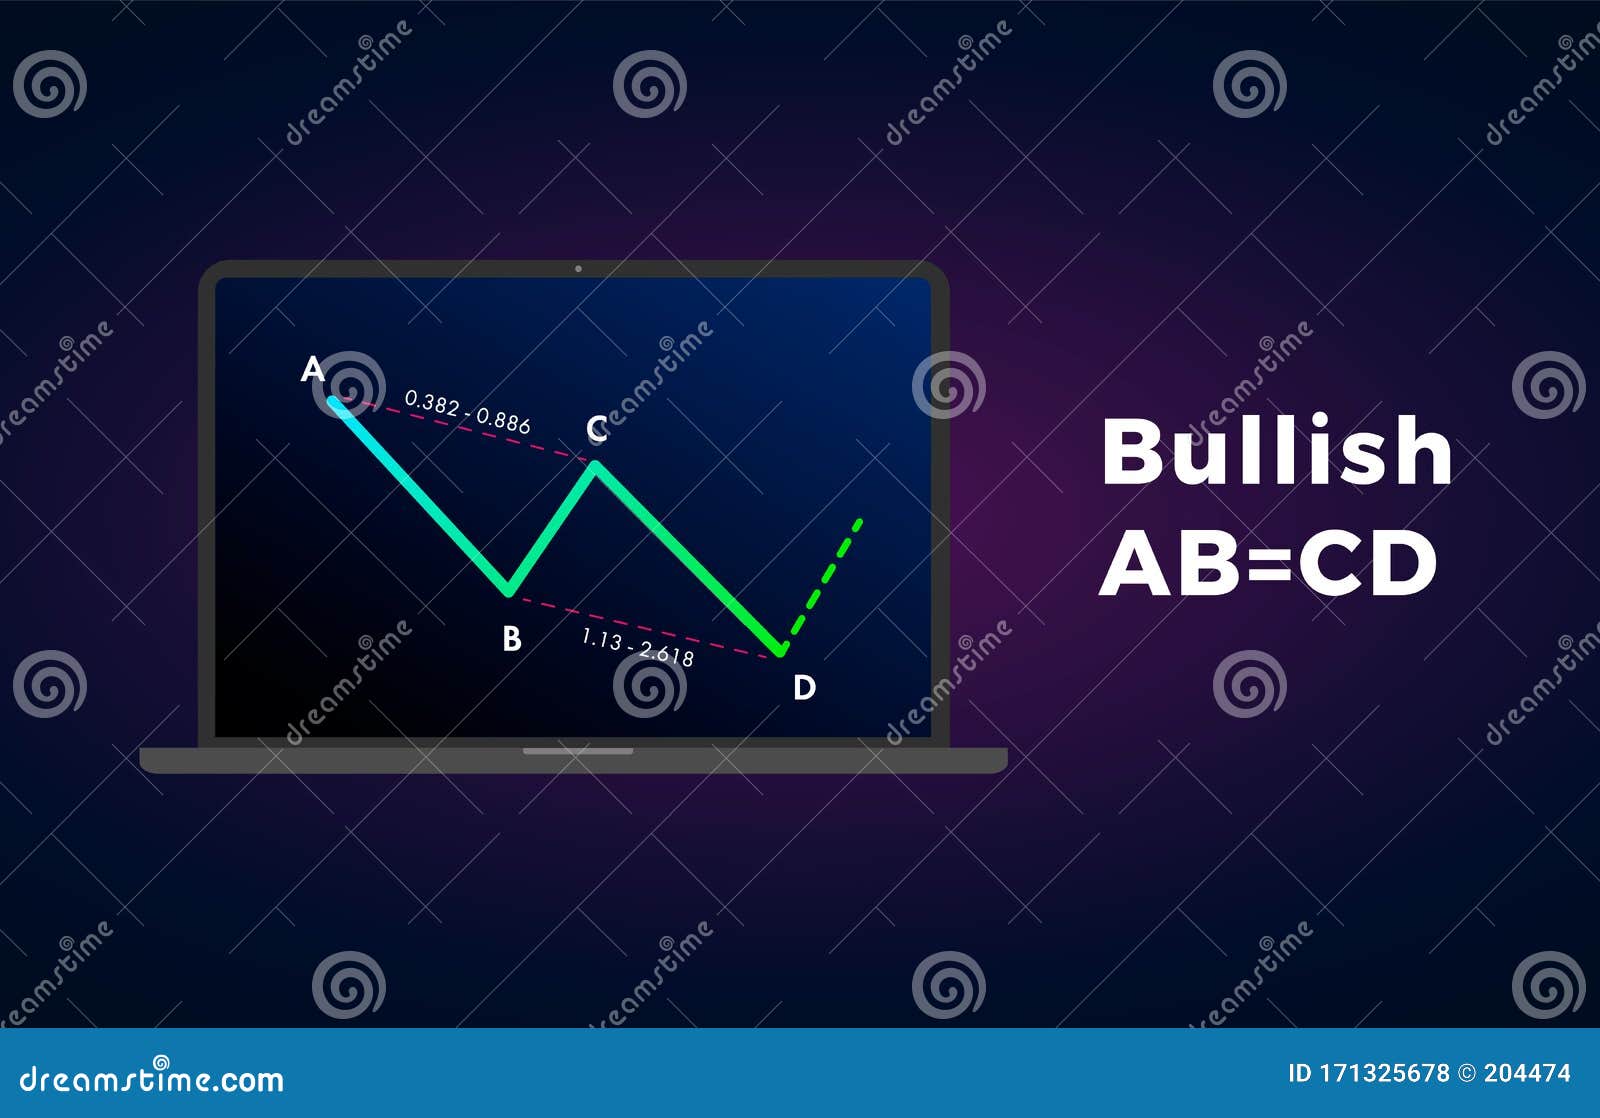 Bullish ABCD - Harmonic Patterns With Bullish Formation ...